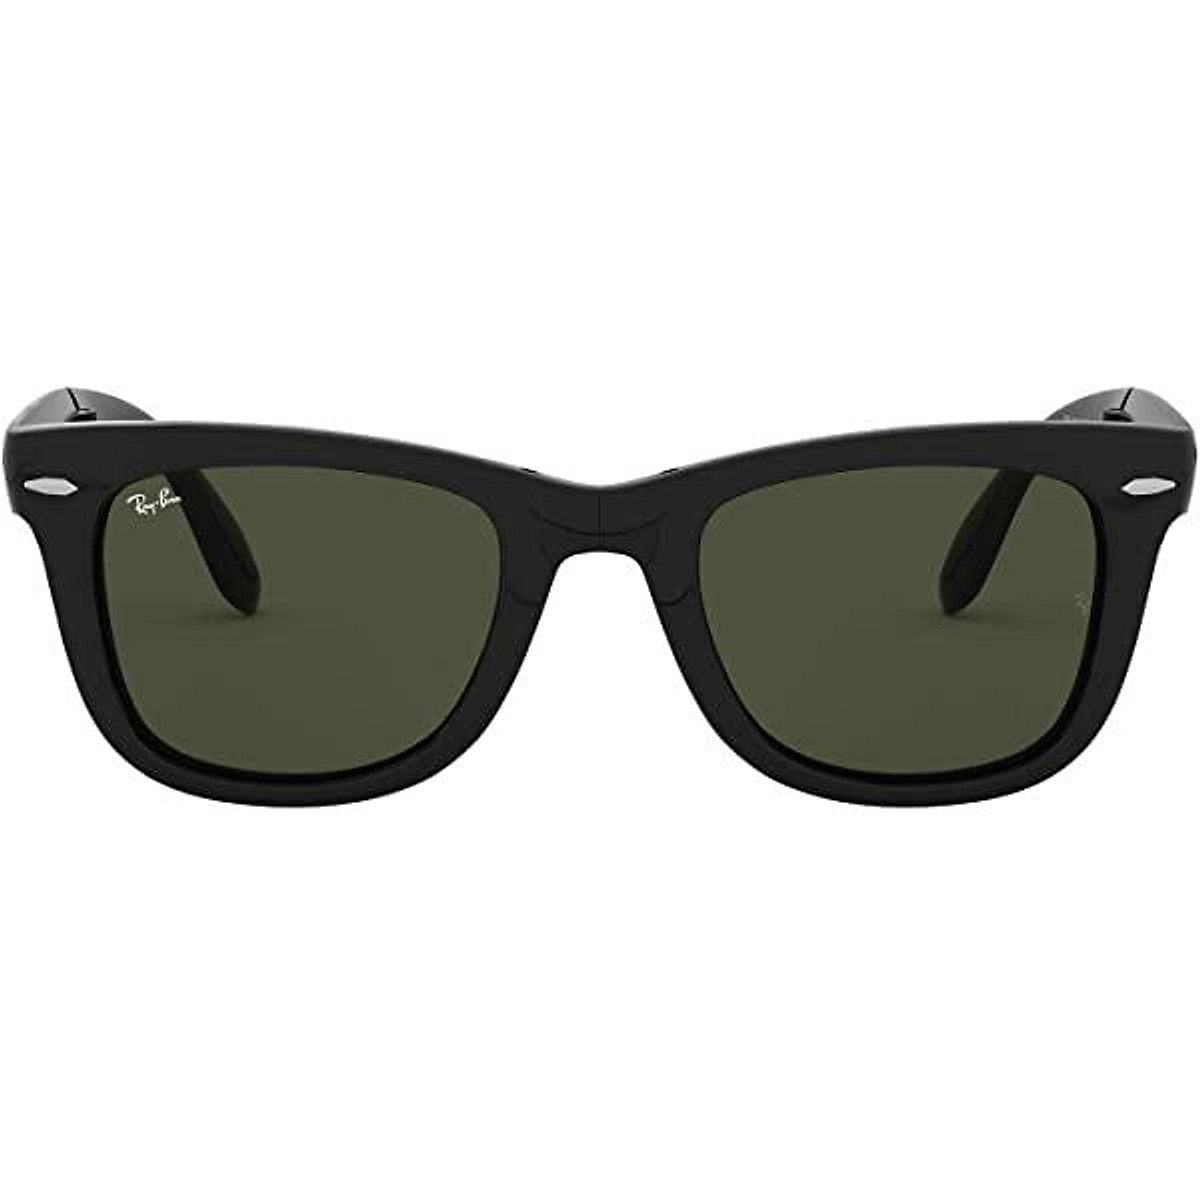 Mua Ray-Ban RB4105 Wayfarer Folding Sunglasses, Black/Green, 54 mm